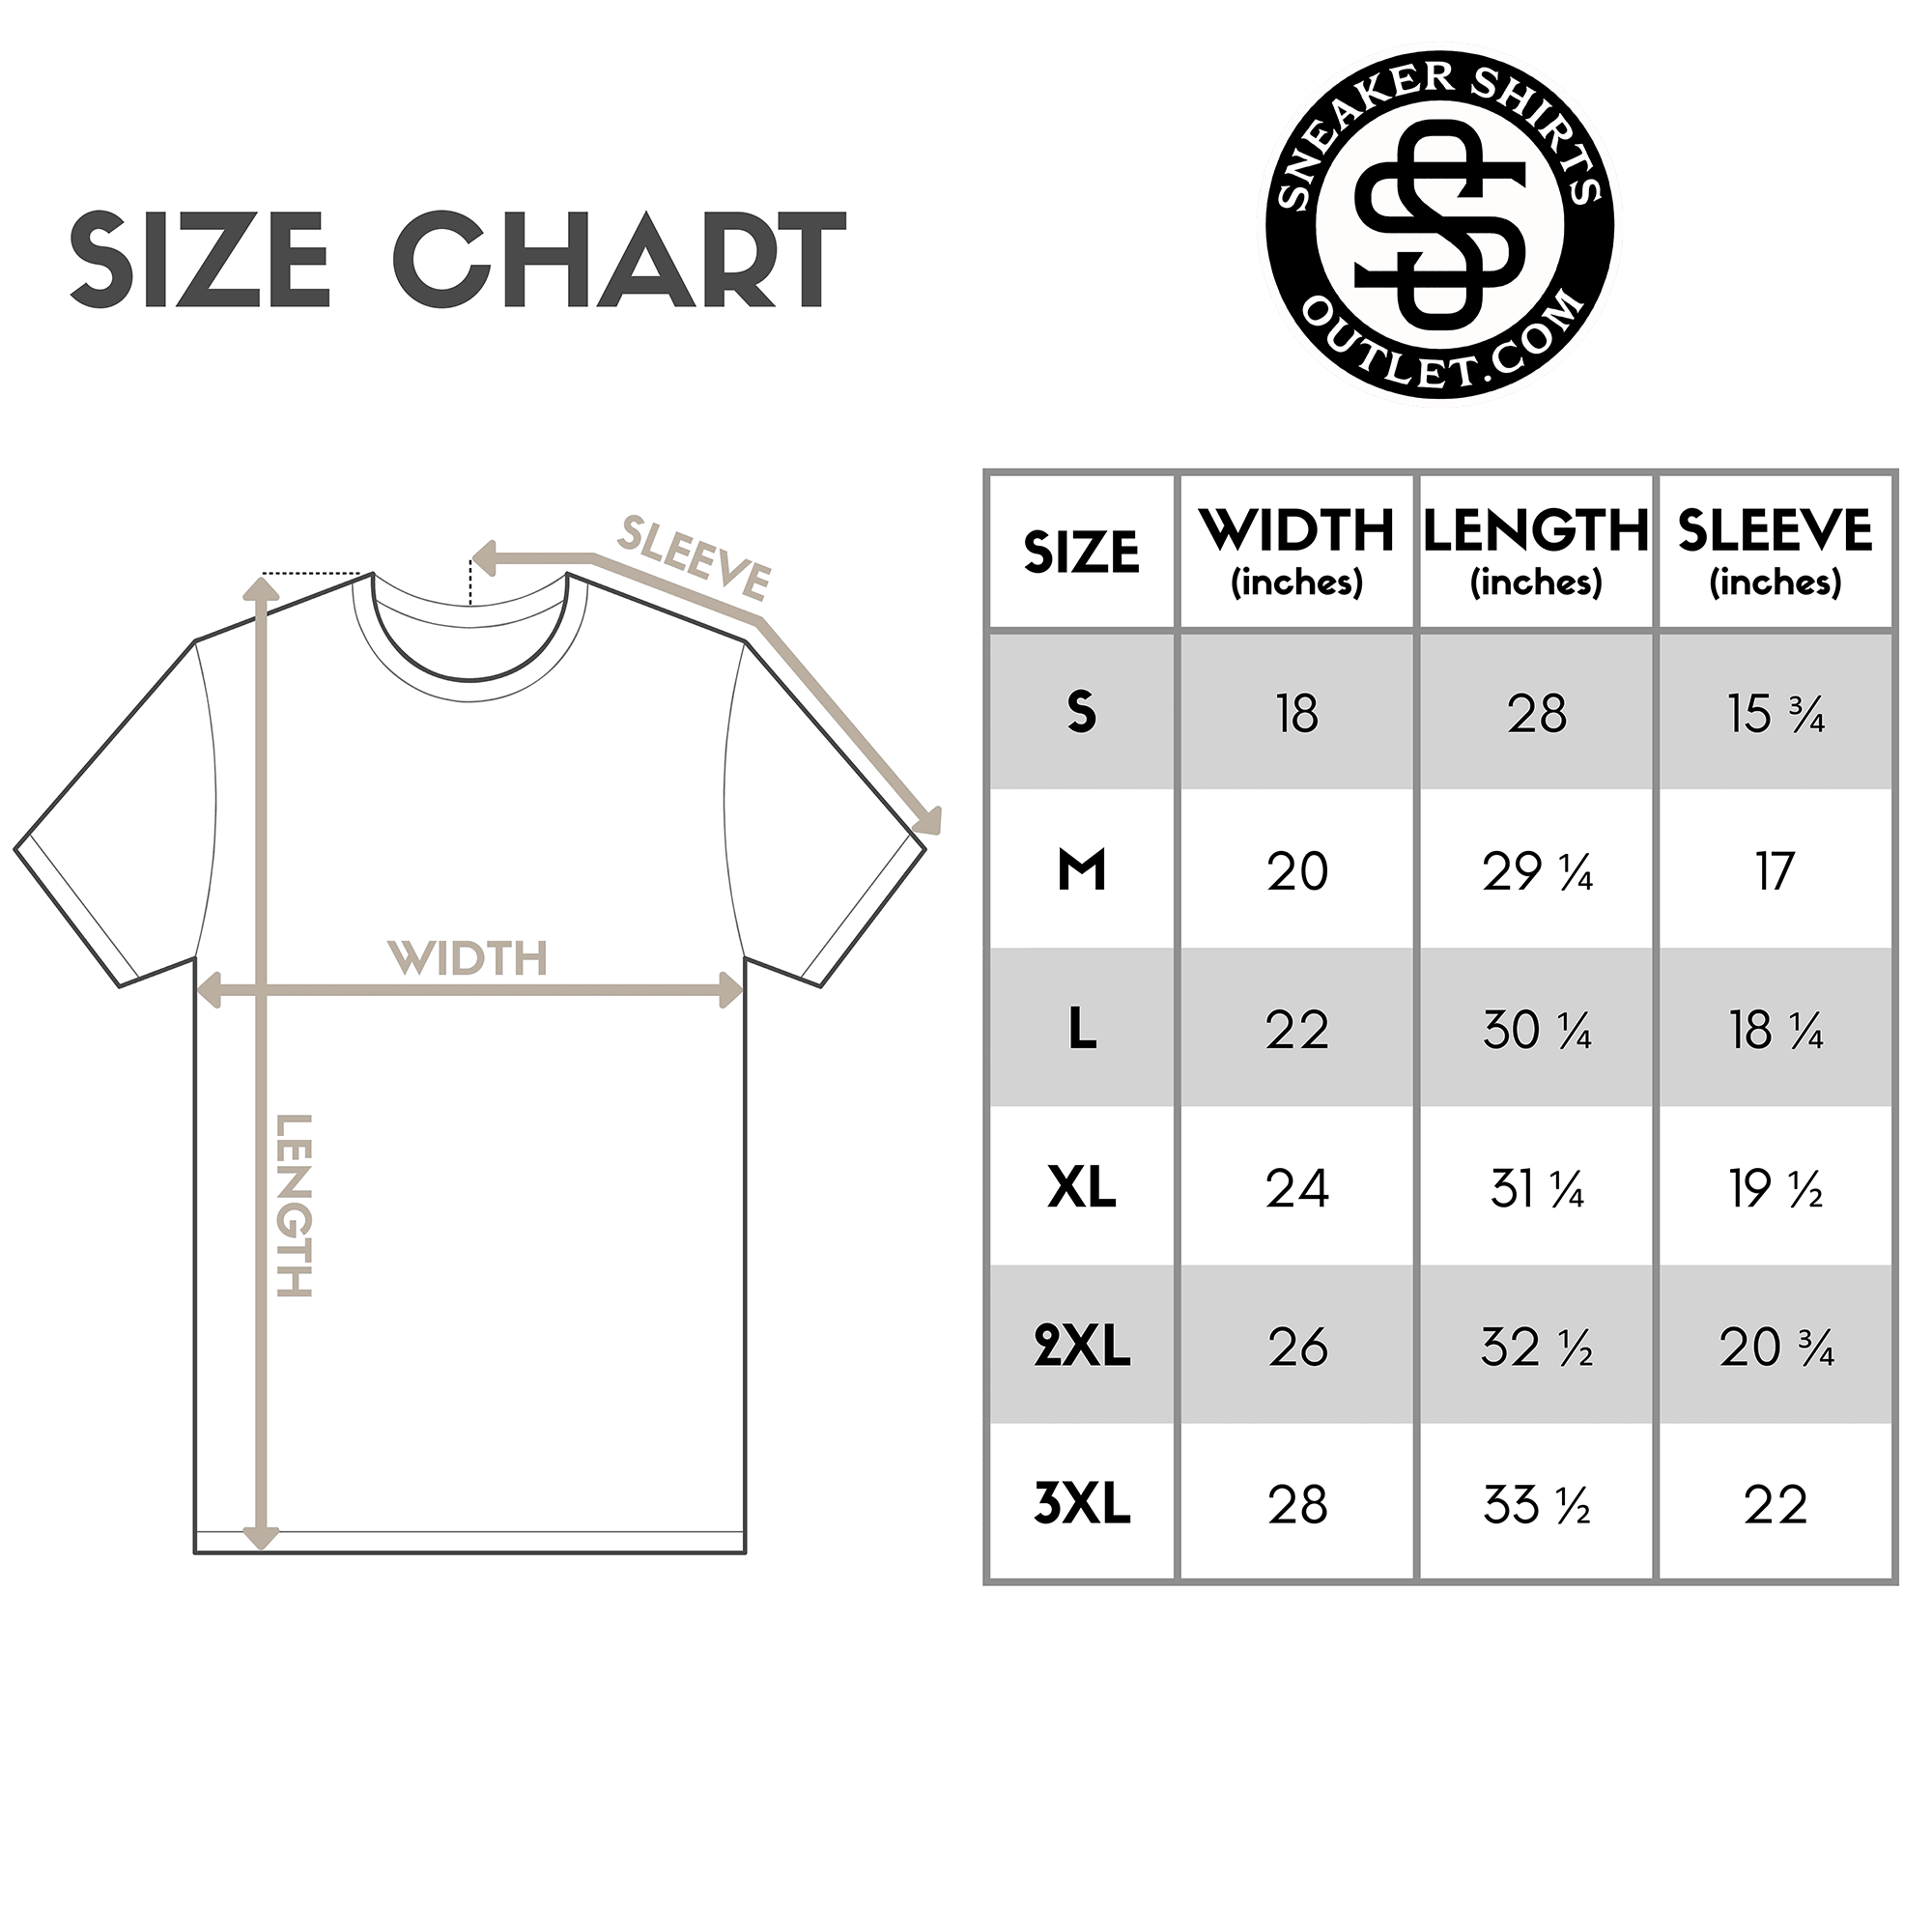 Grind and Shine Same Shirt size chart photo